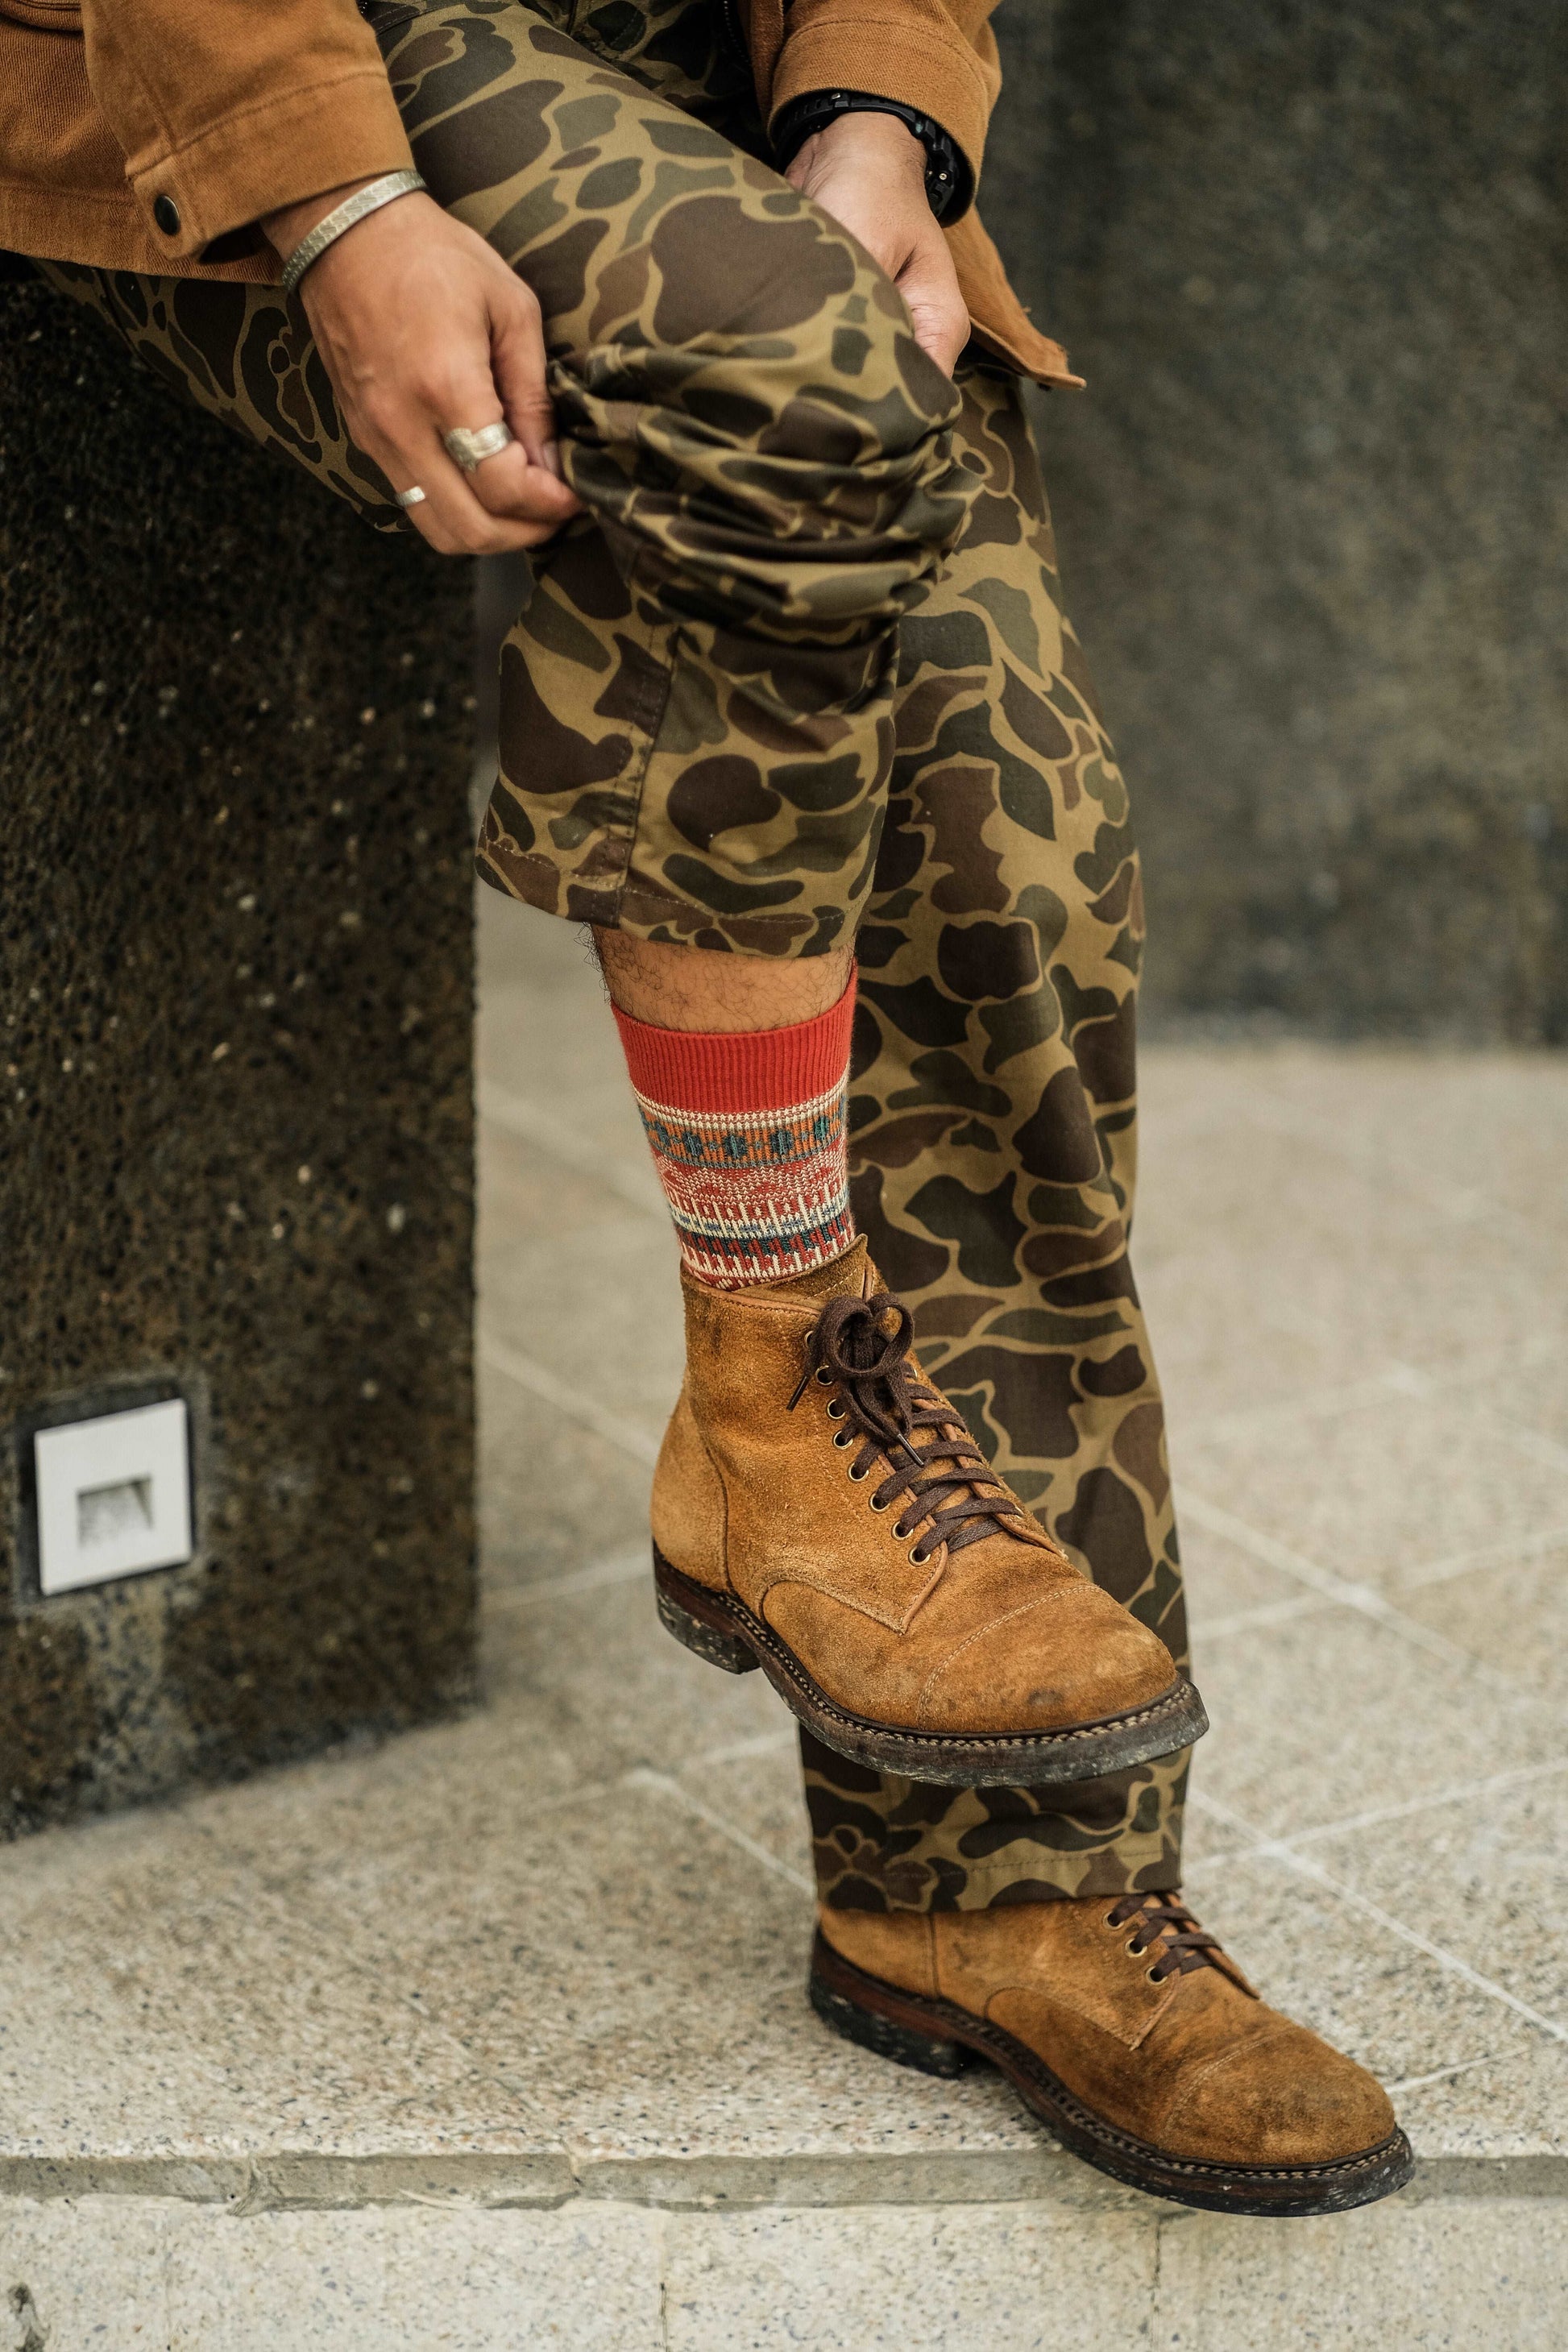 Malaita red socks with brown boots - Comfysocks 